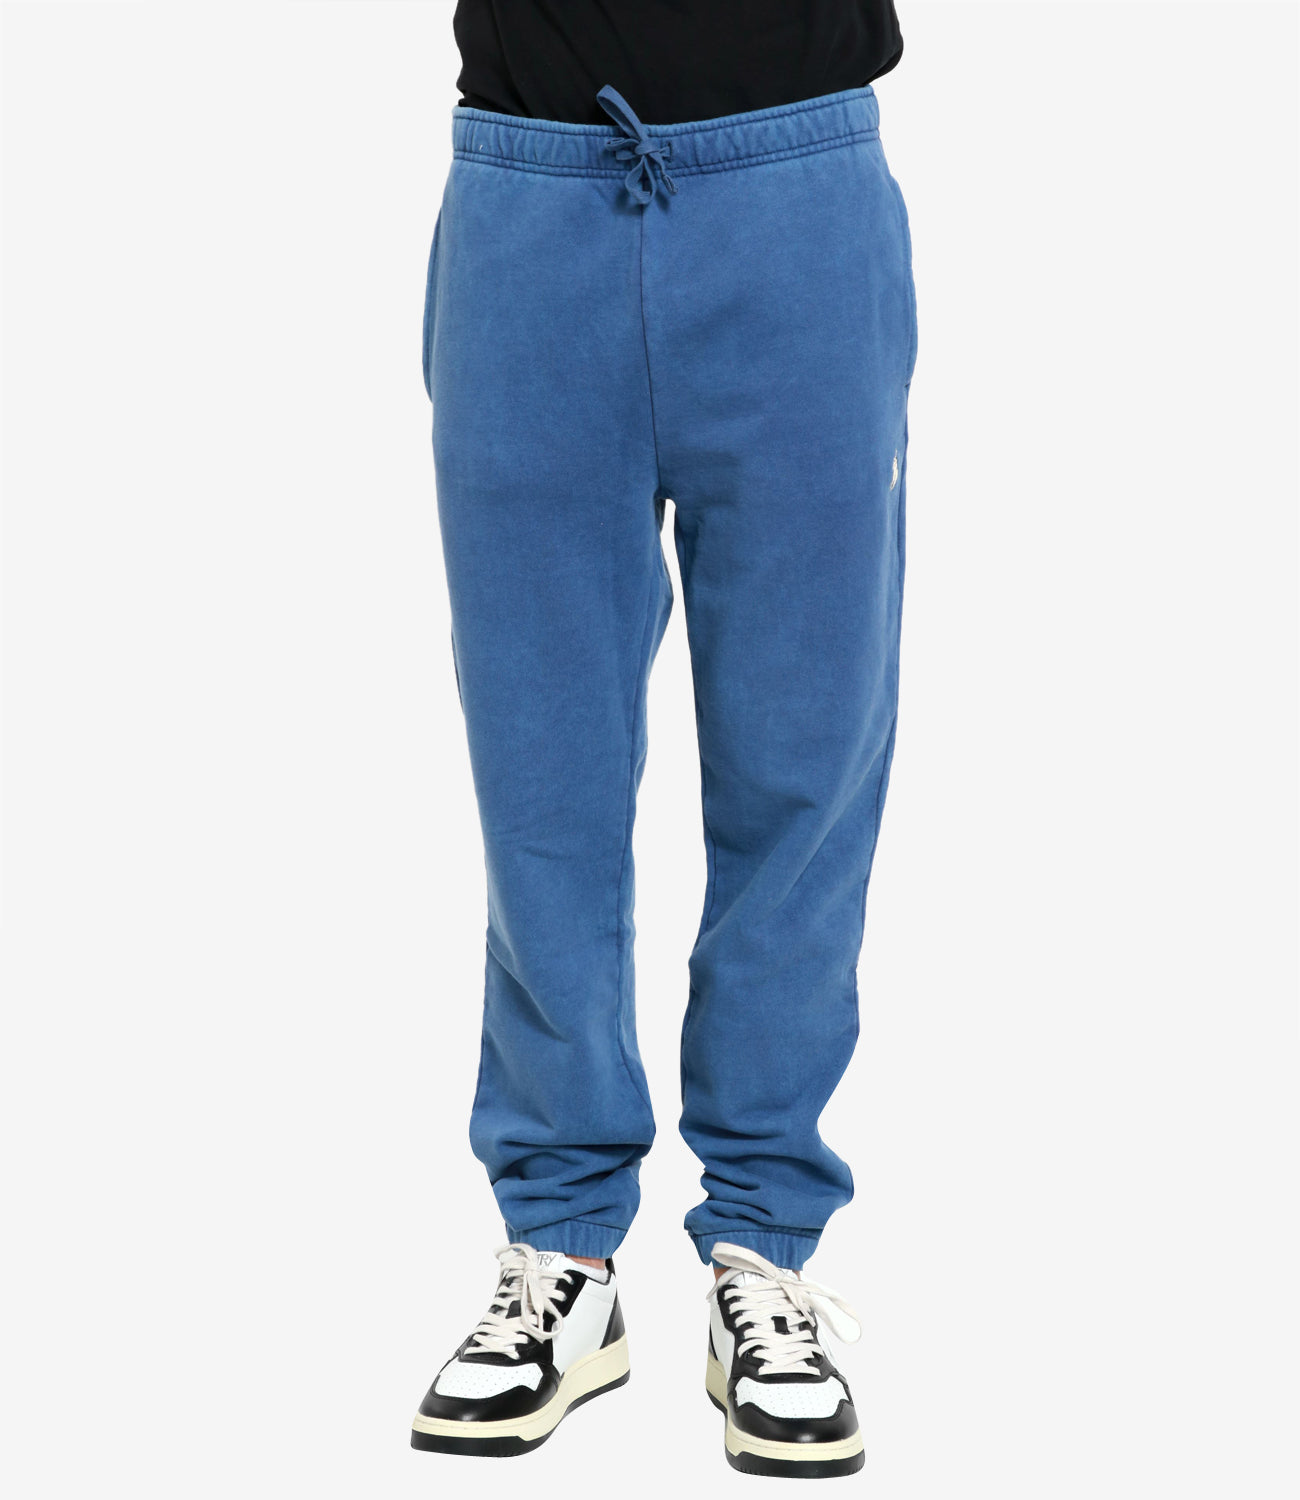 Polo Ralph Lauren | Navy Blue Sports Pants